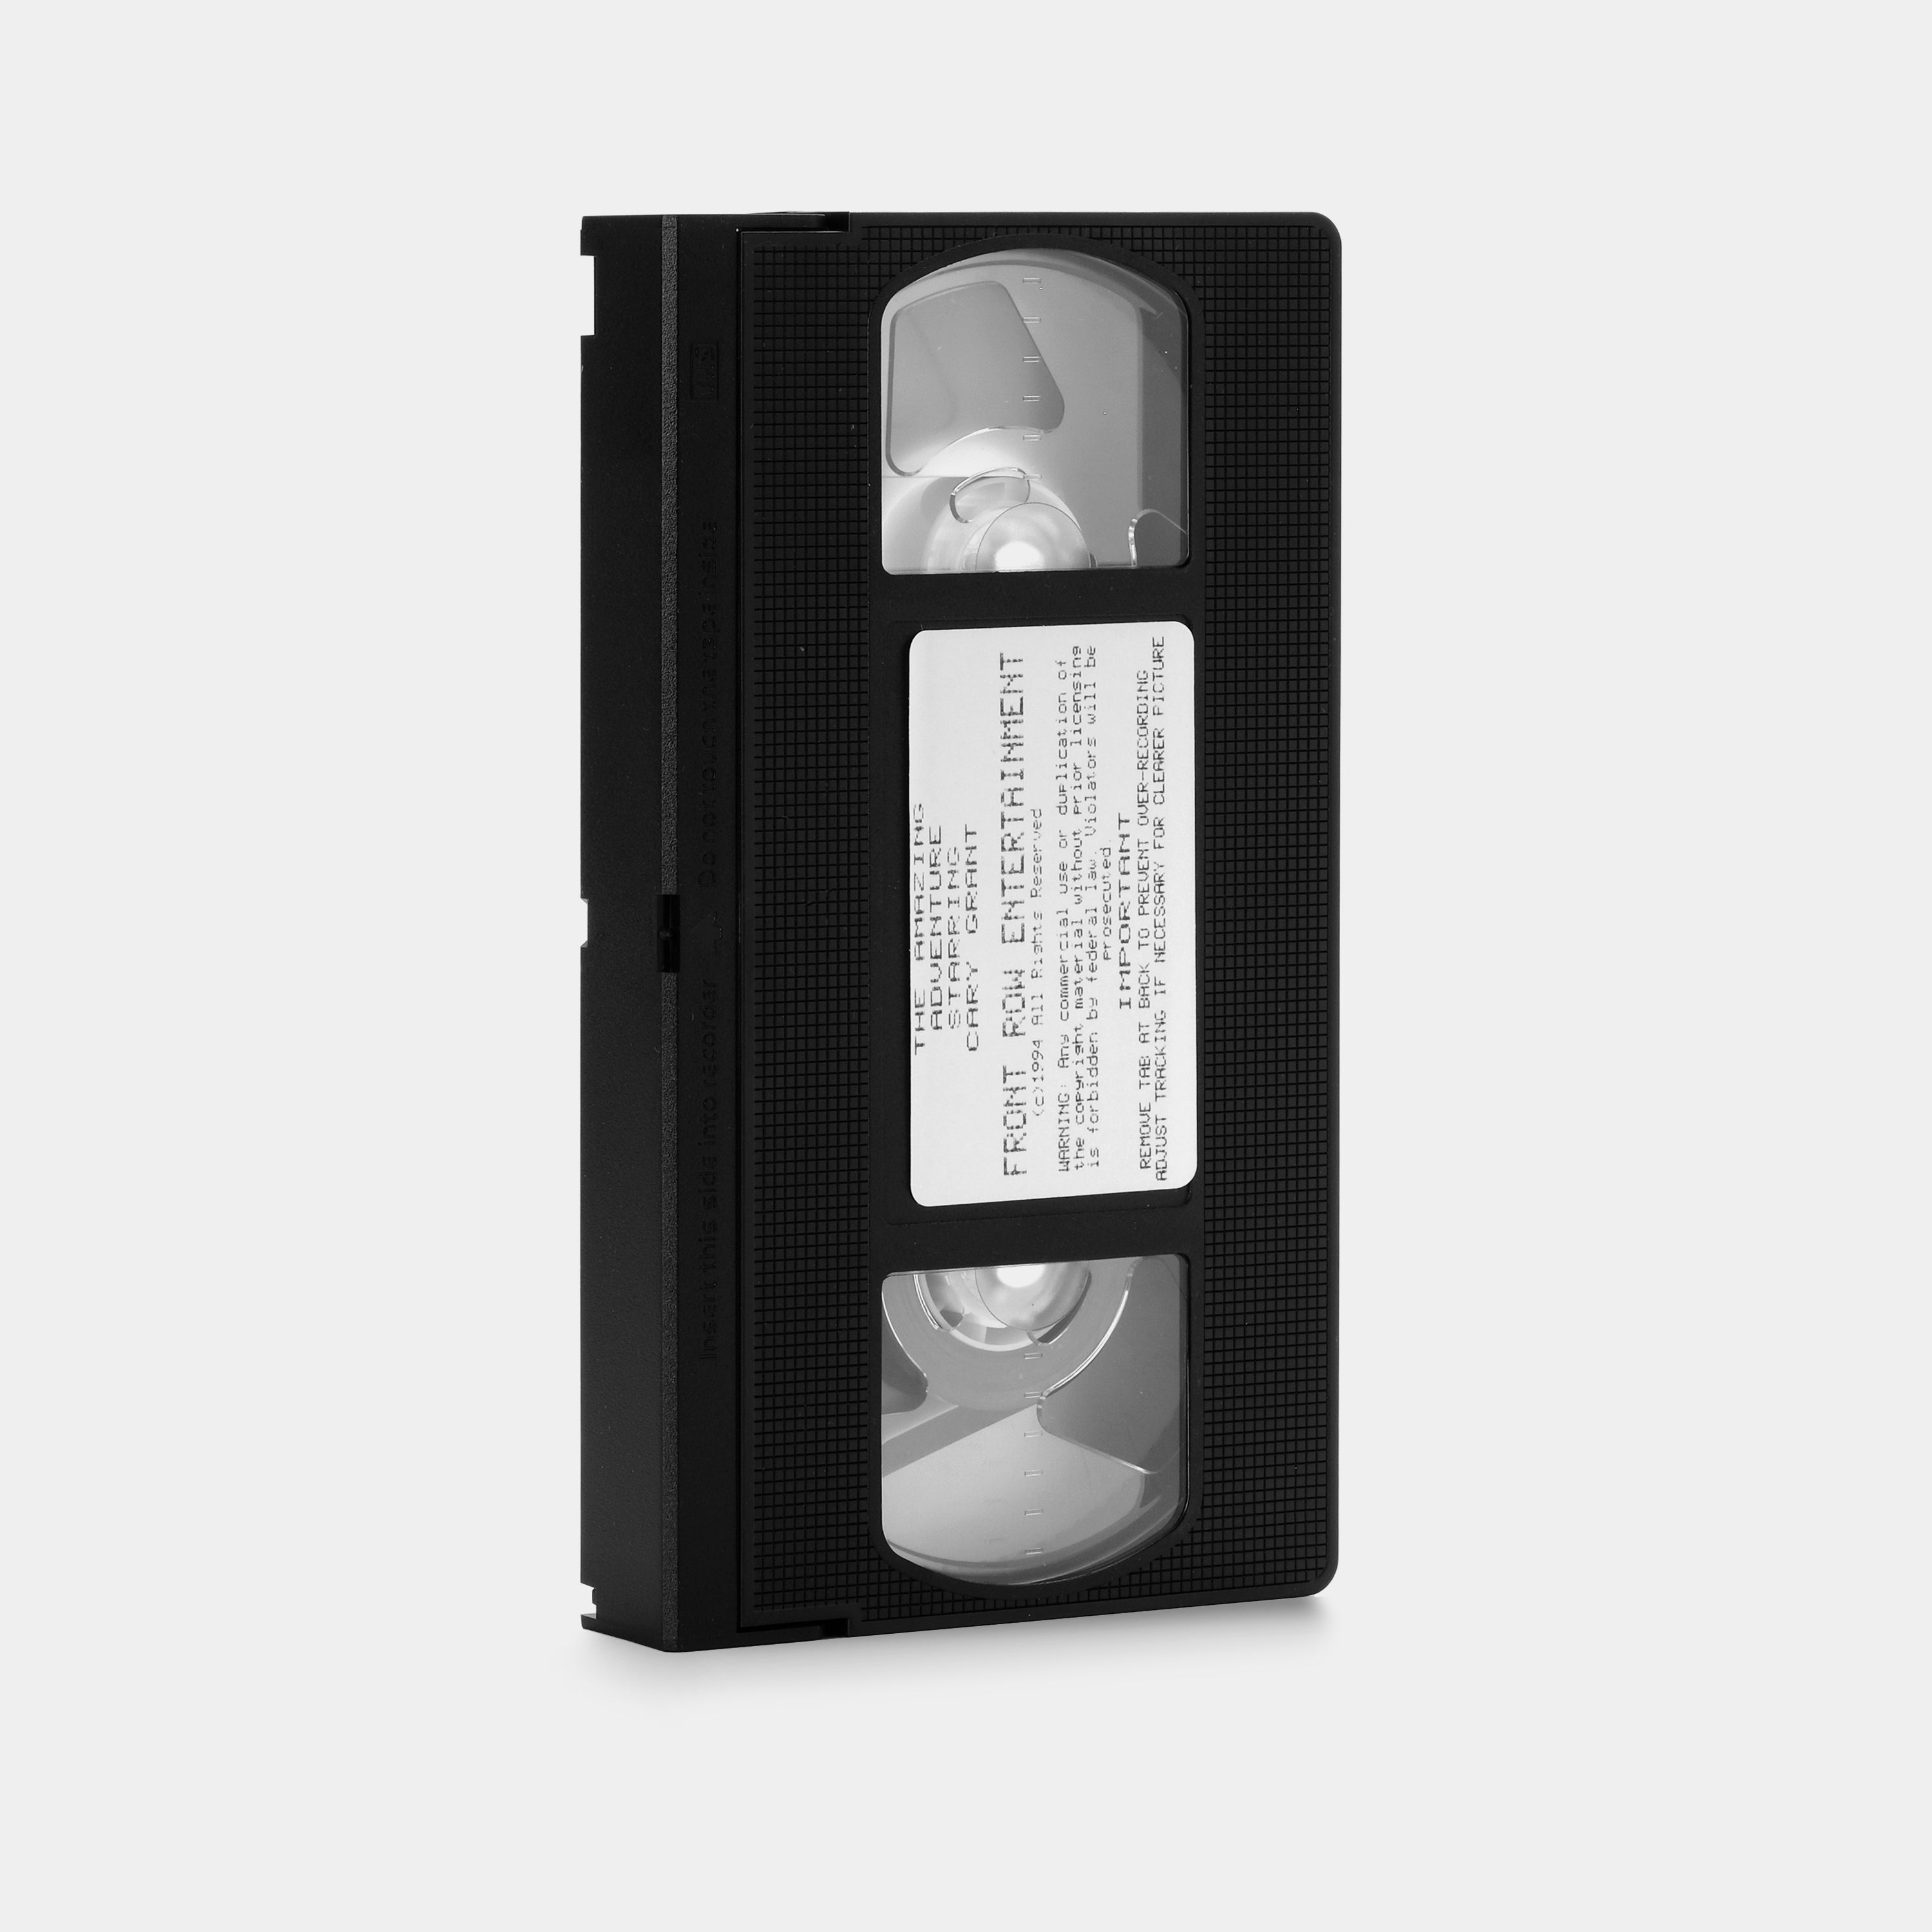 The Amazing Adventure VHS Tape